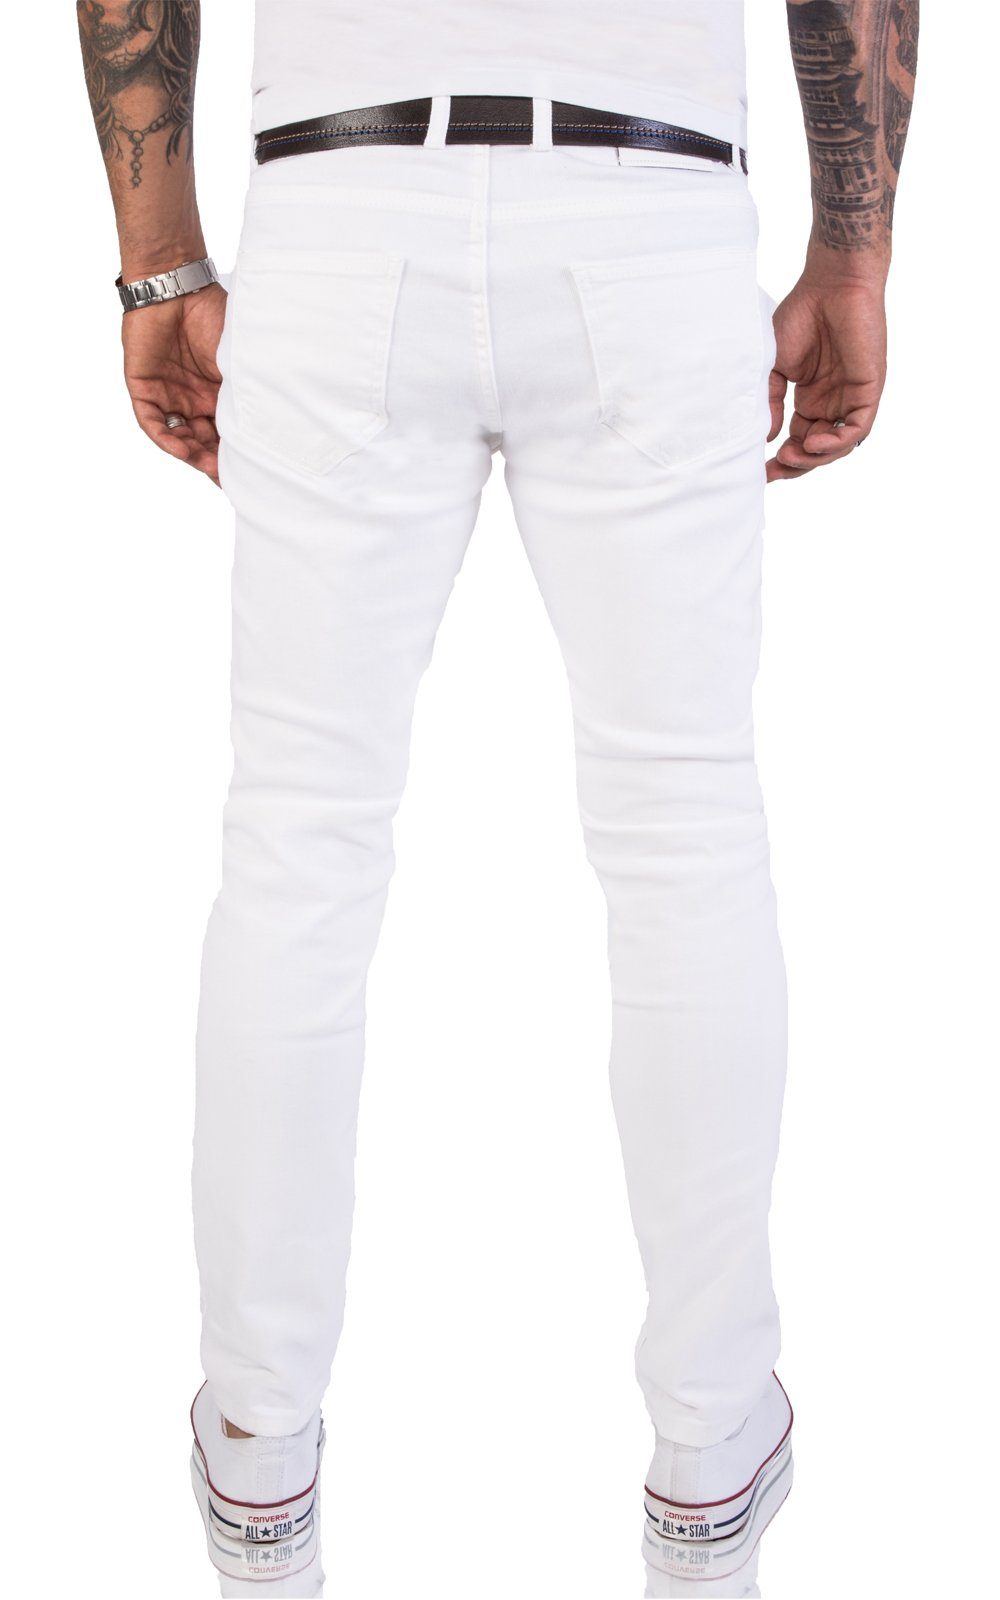 RC-2155 Weiß Rock Slim-fit-Jeans Slim Creek Jeans Herren Fit